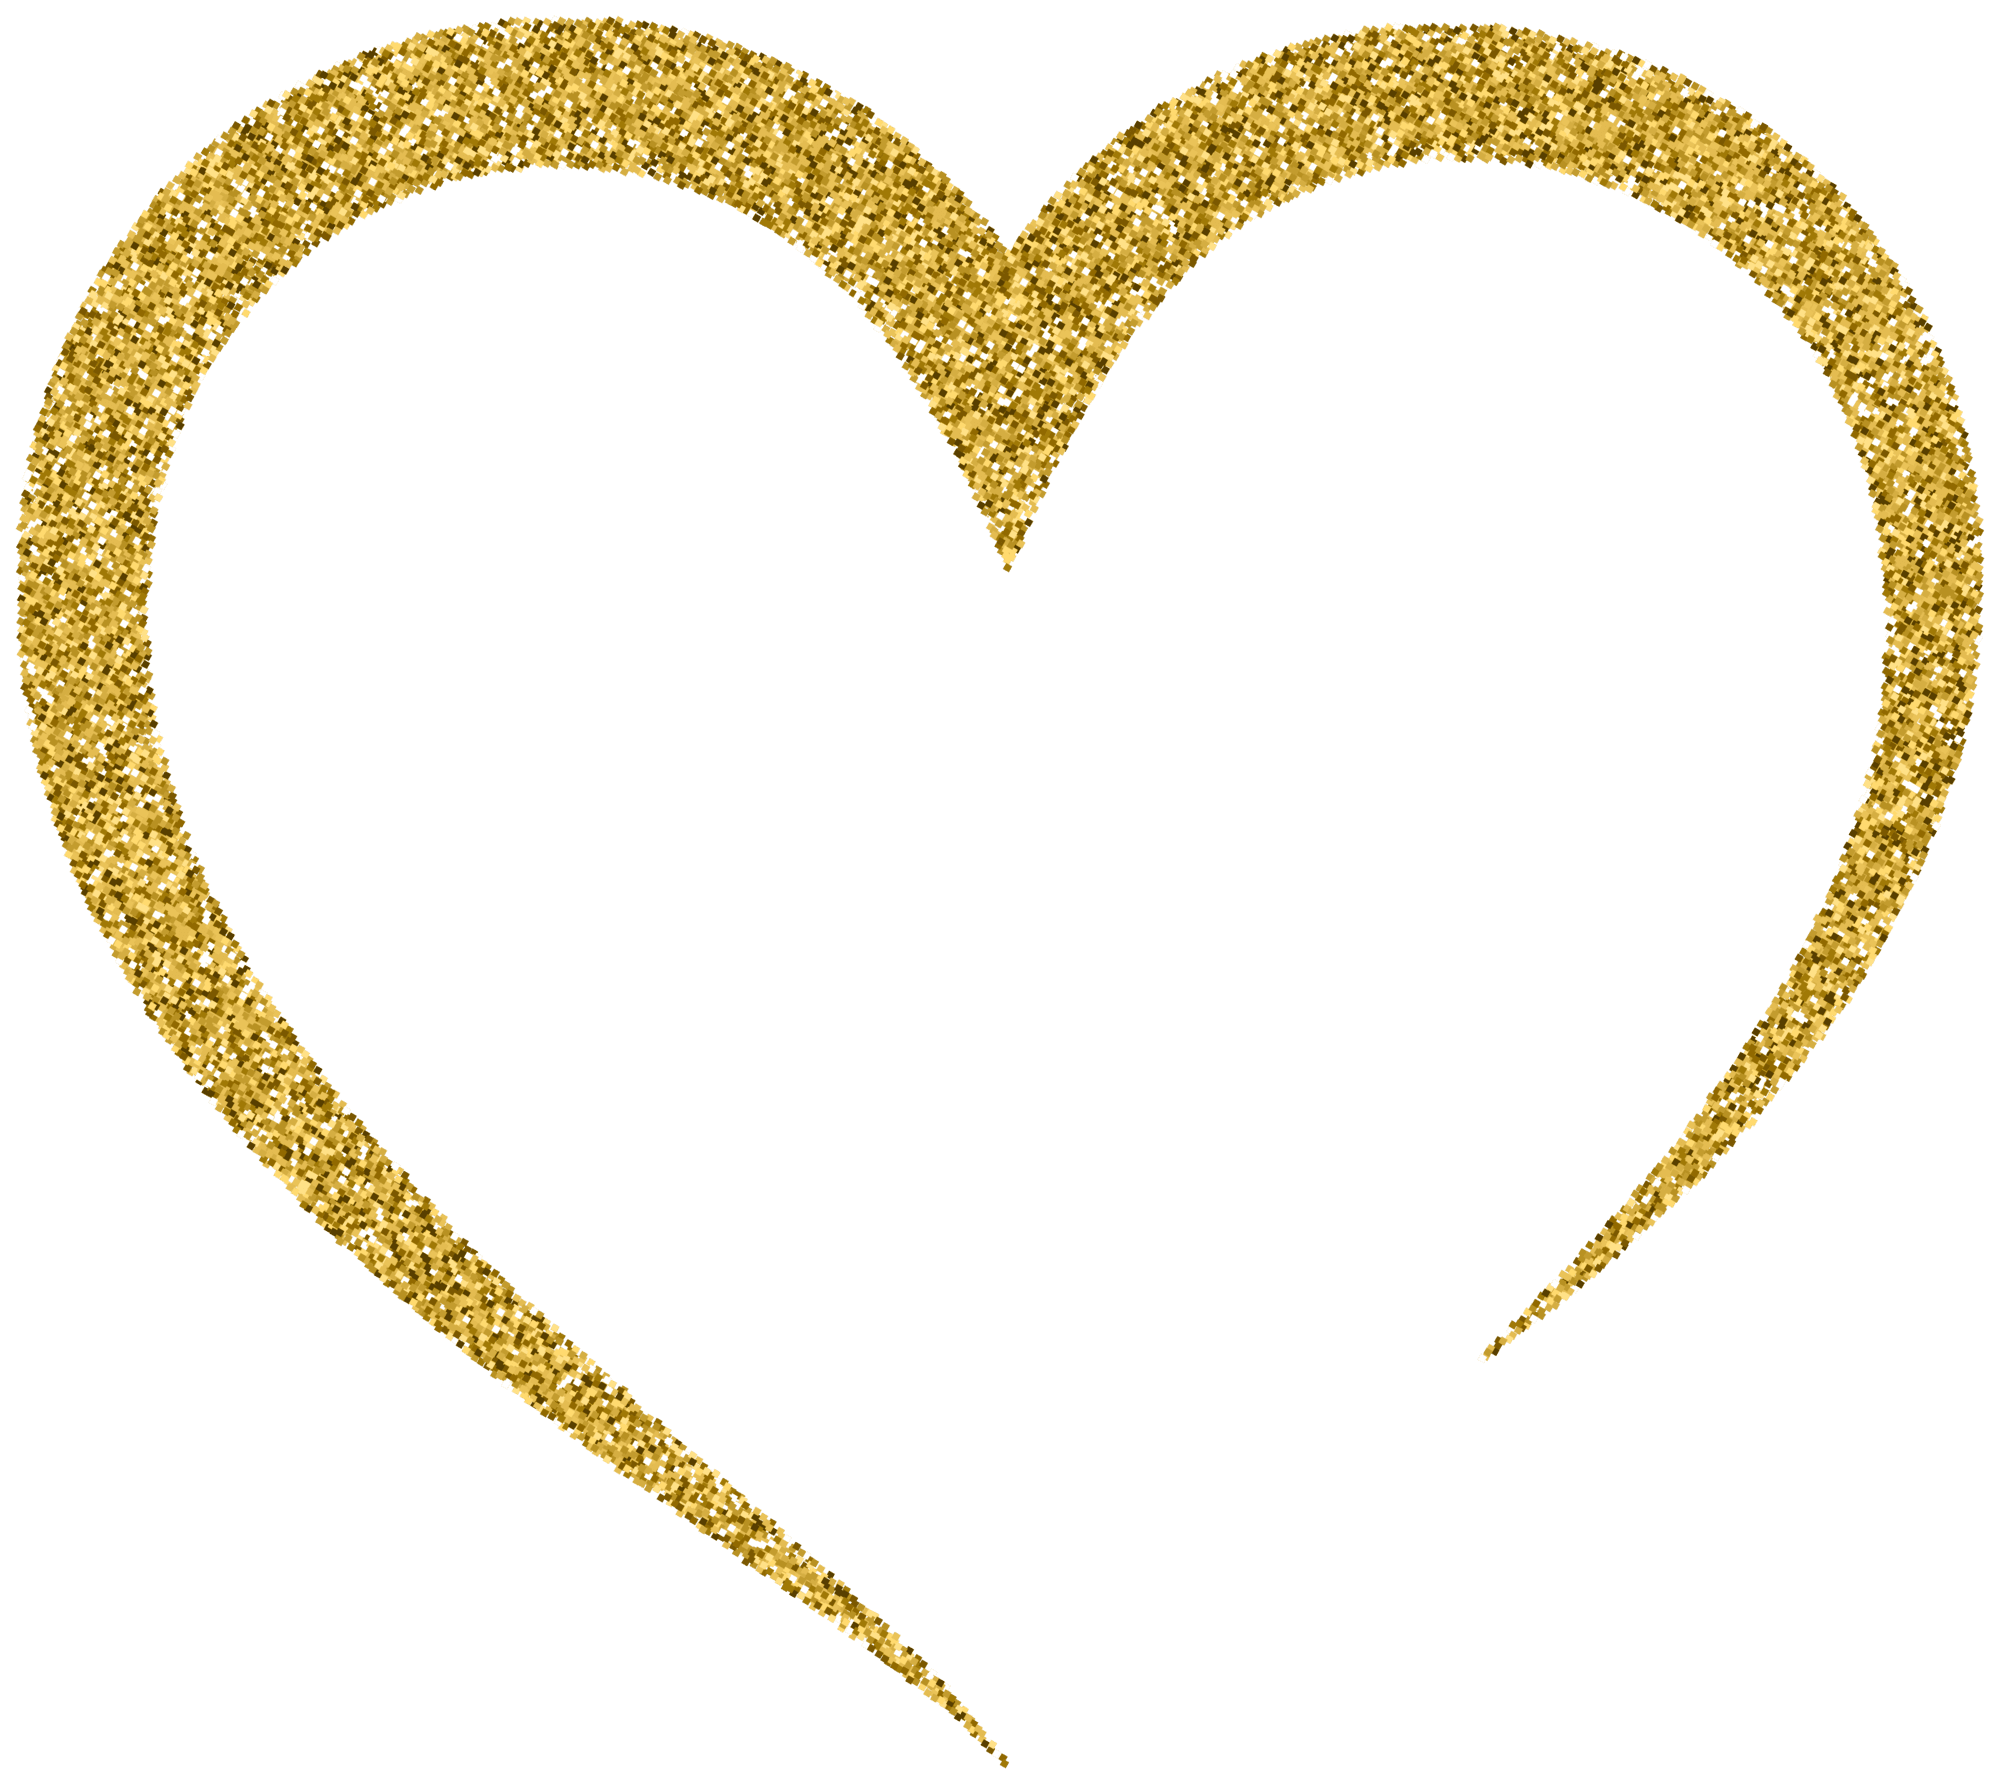 Heart Gold Decorative Transparent Image